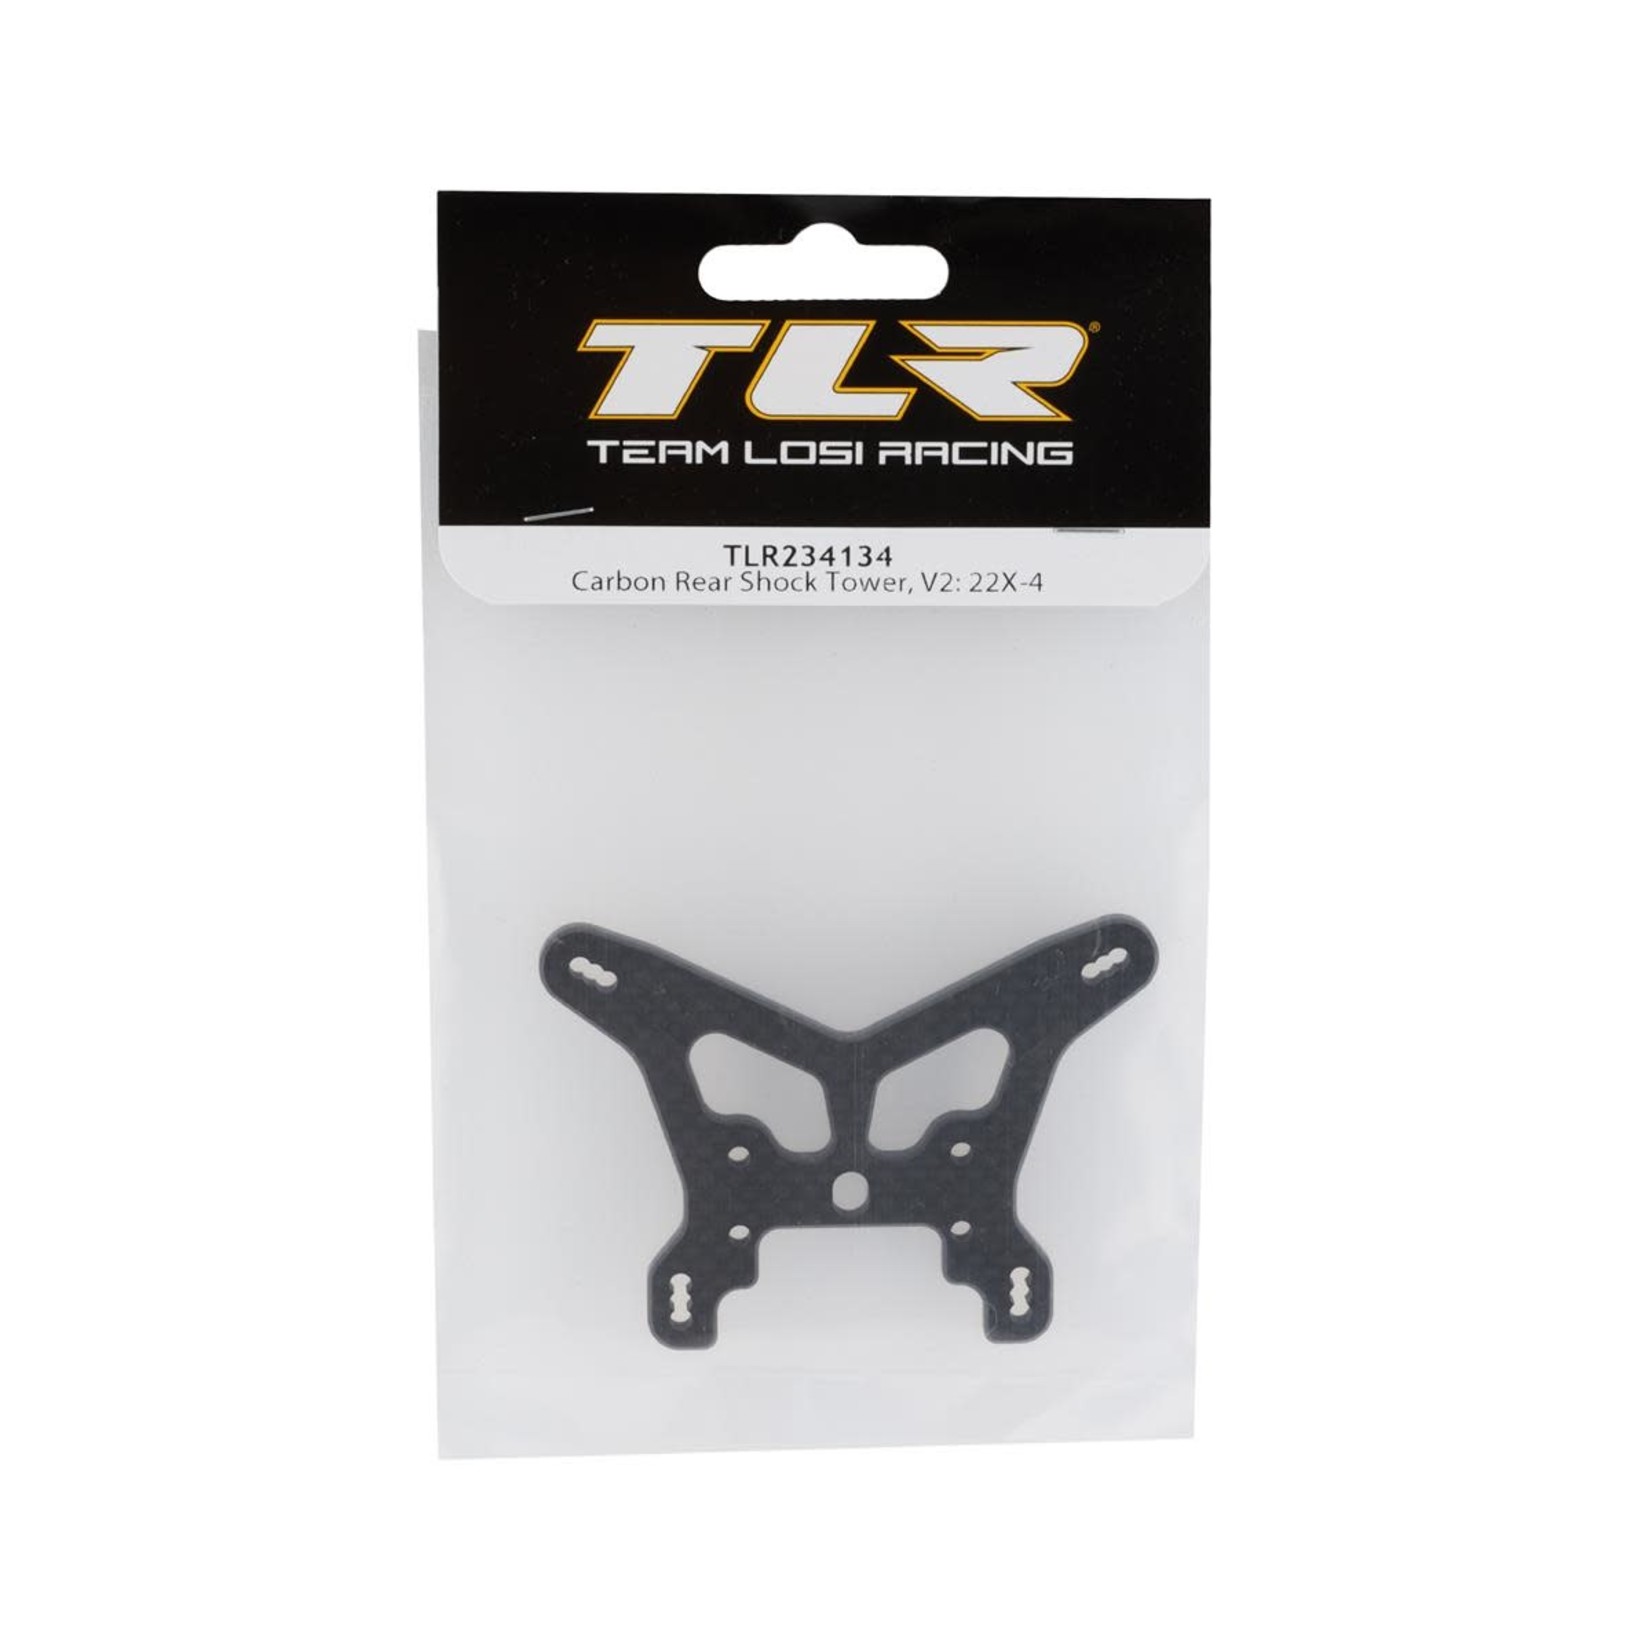 TLR Team Losi Racing 22X-4 V2 Carbon Rear Shock Tower #TLR234134